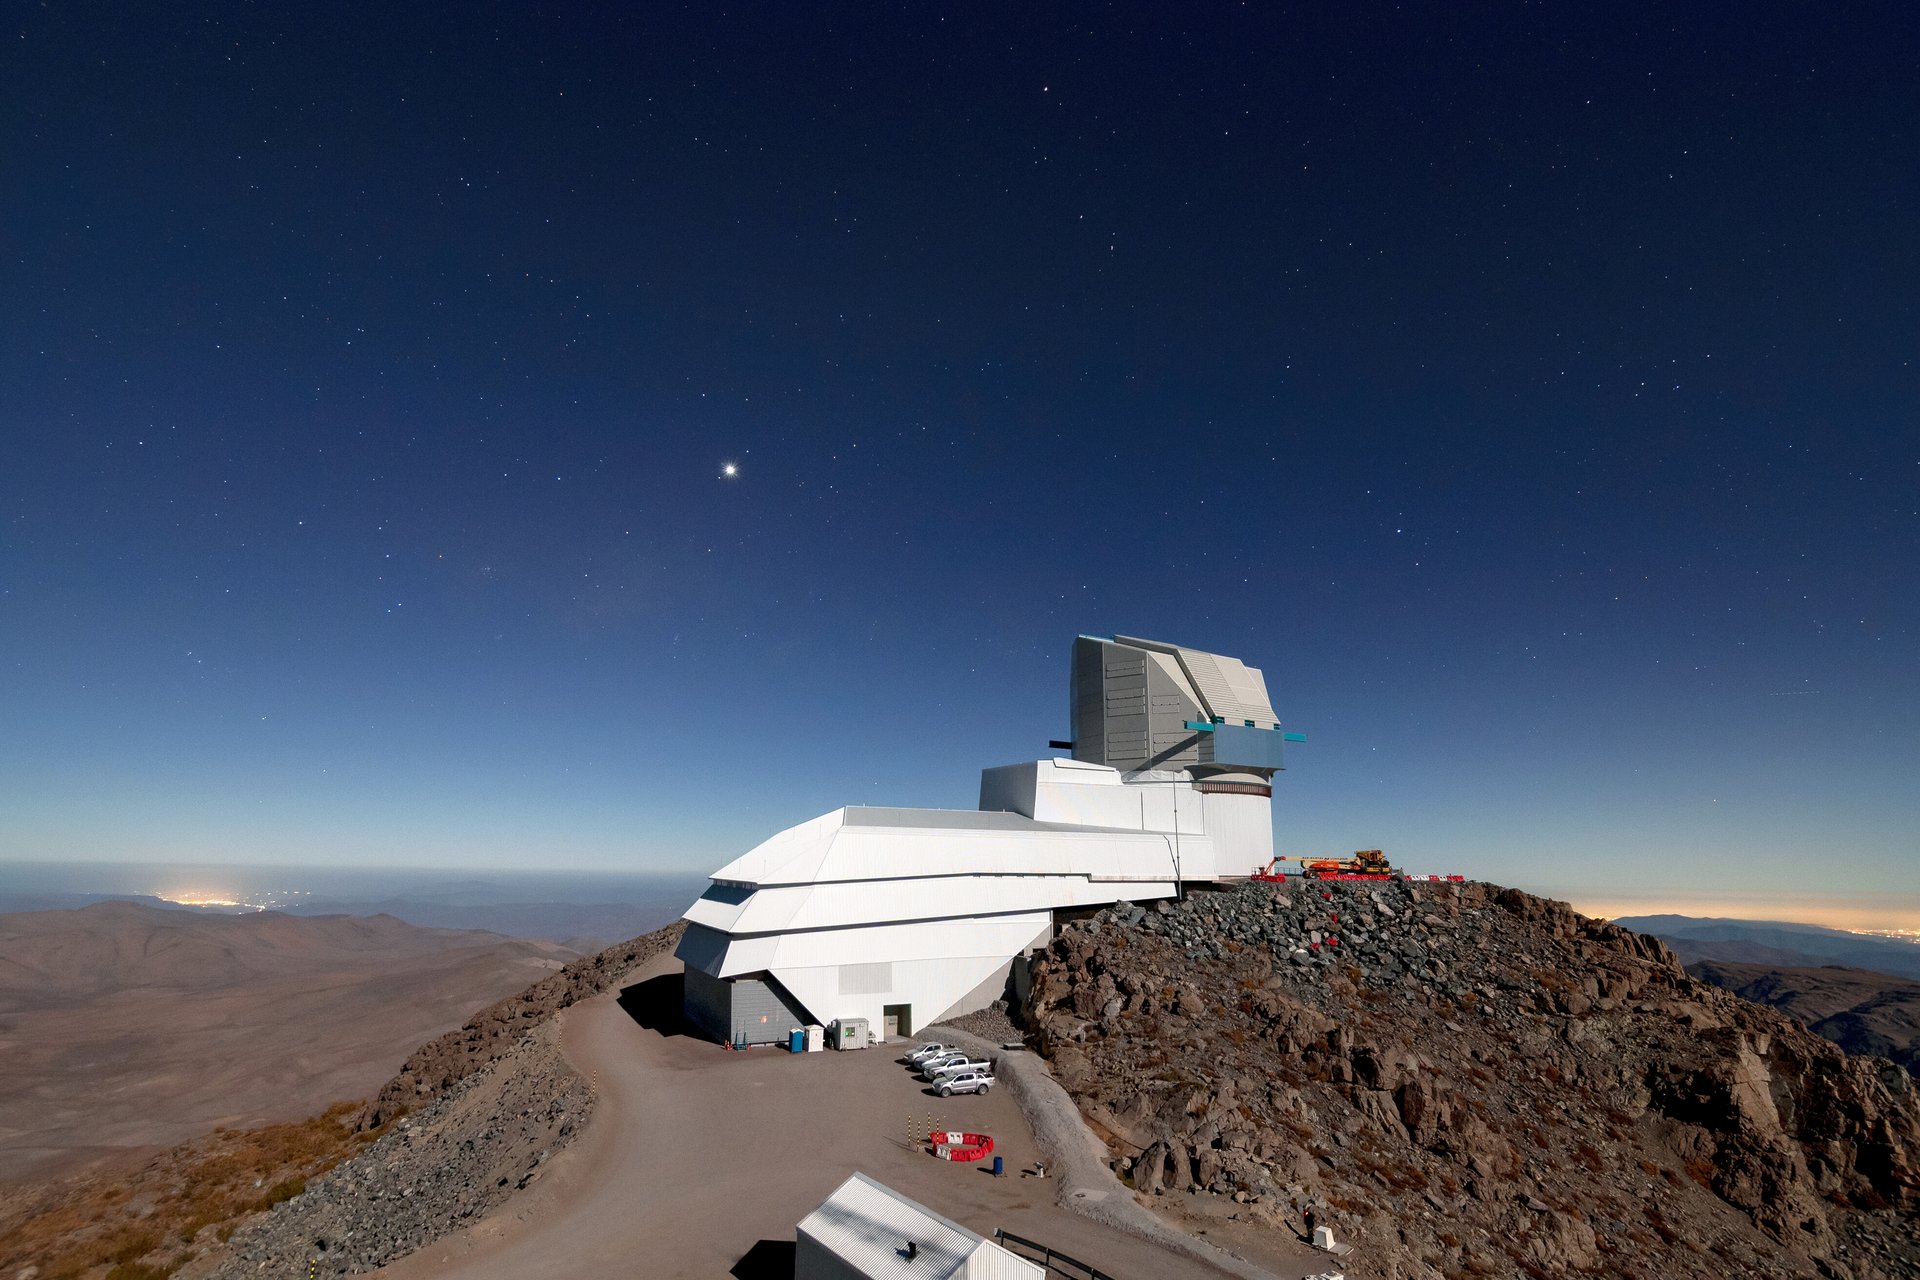 Foto vom Vera C. Rubin Observatorium